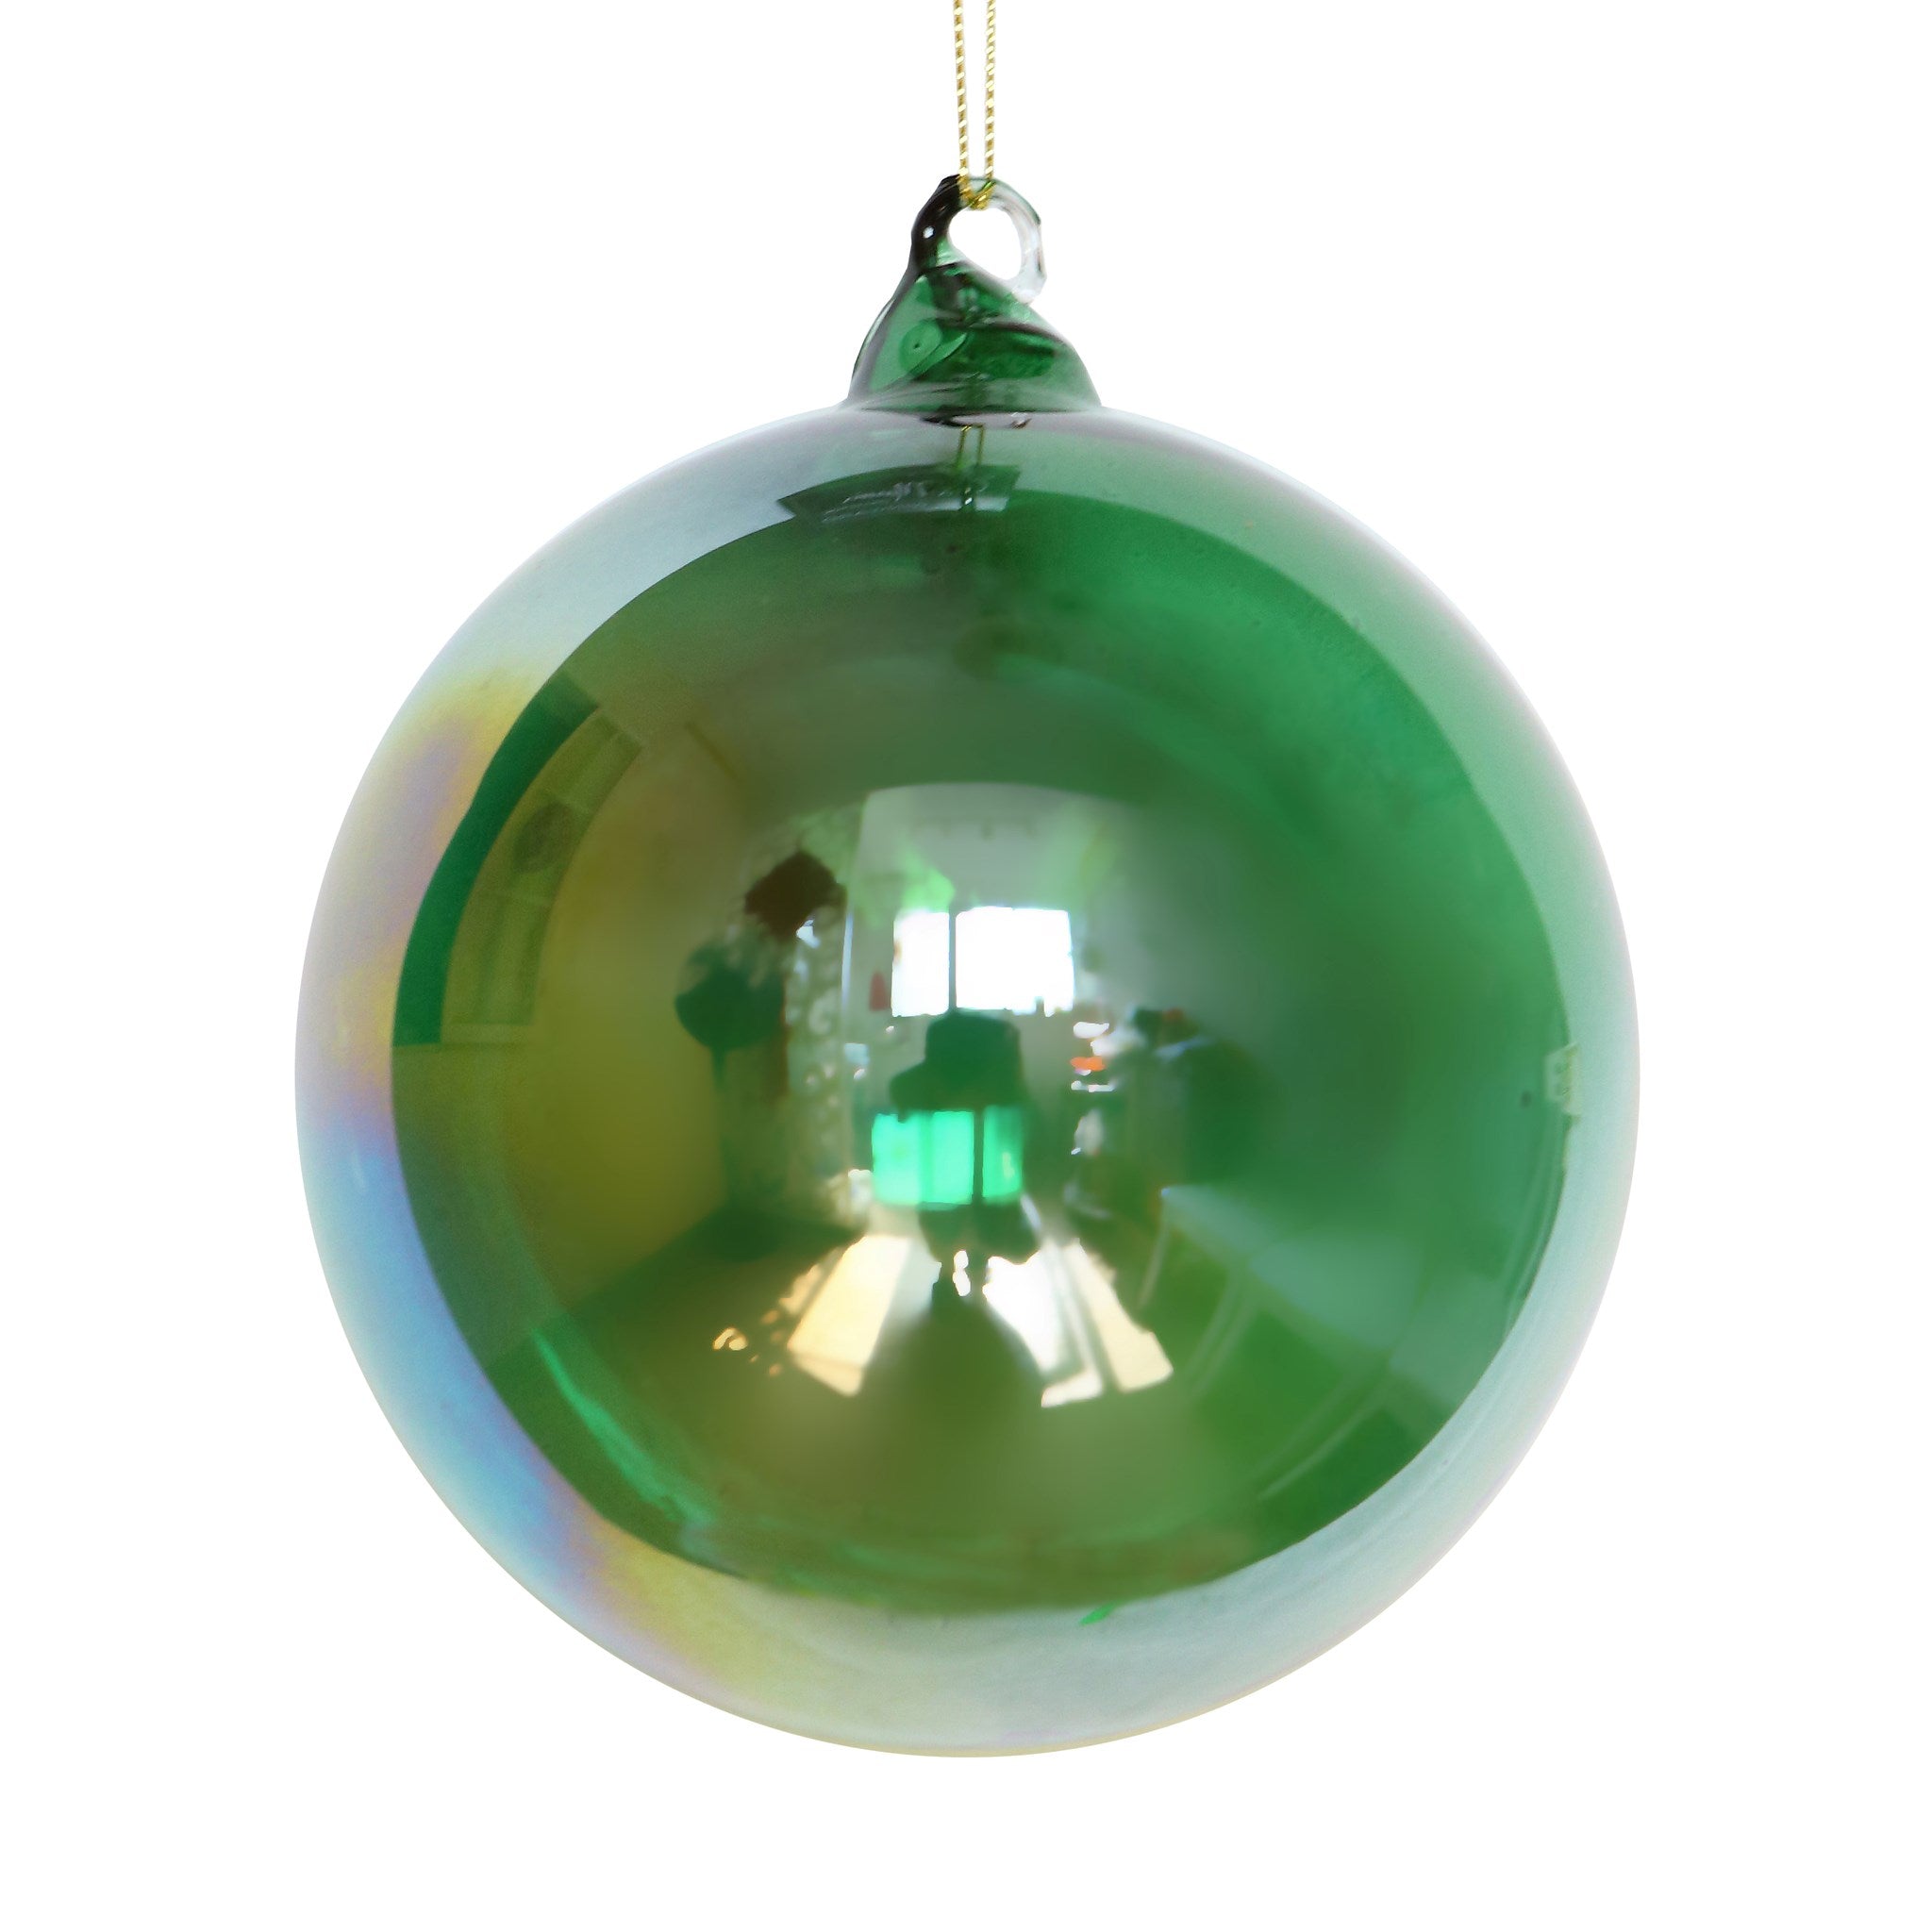 Jim Marvin Emerald Green Bottle Glass Ornaments, Transparent & Irridescent